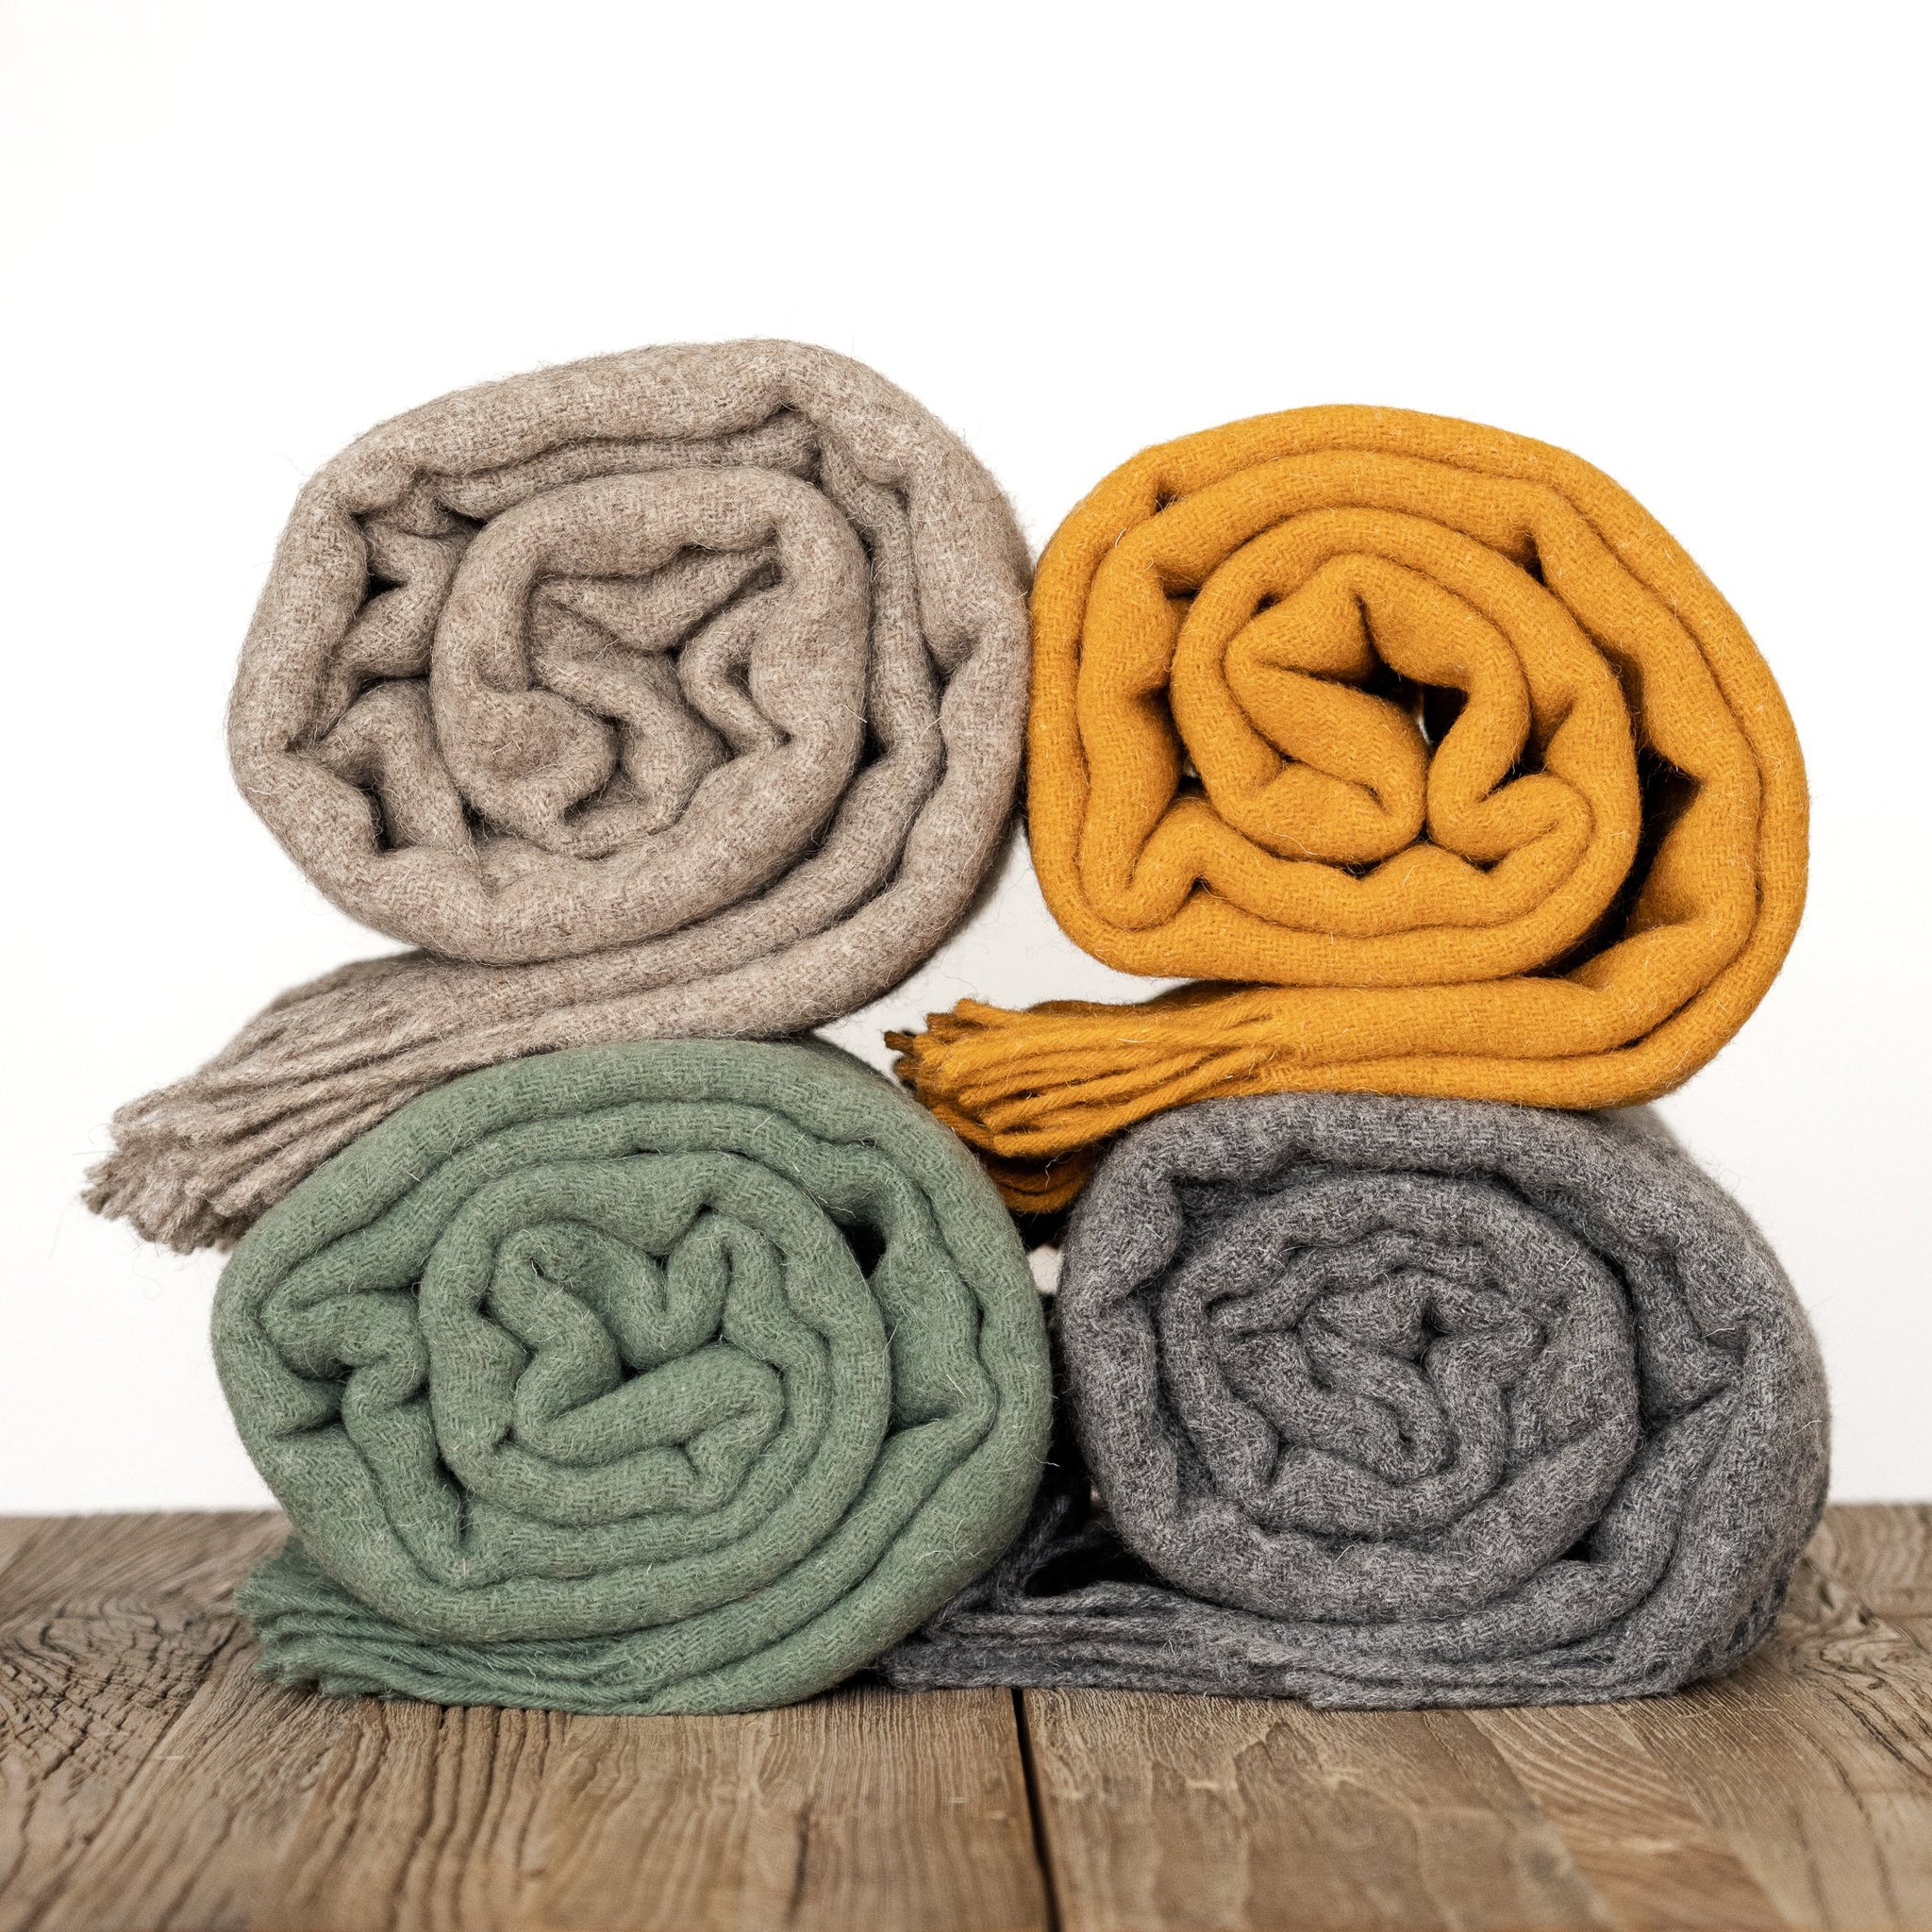 100% natural wool blanket - Dumbo